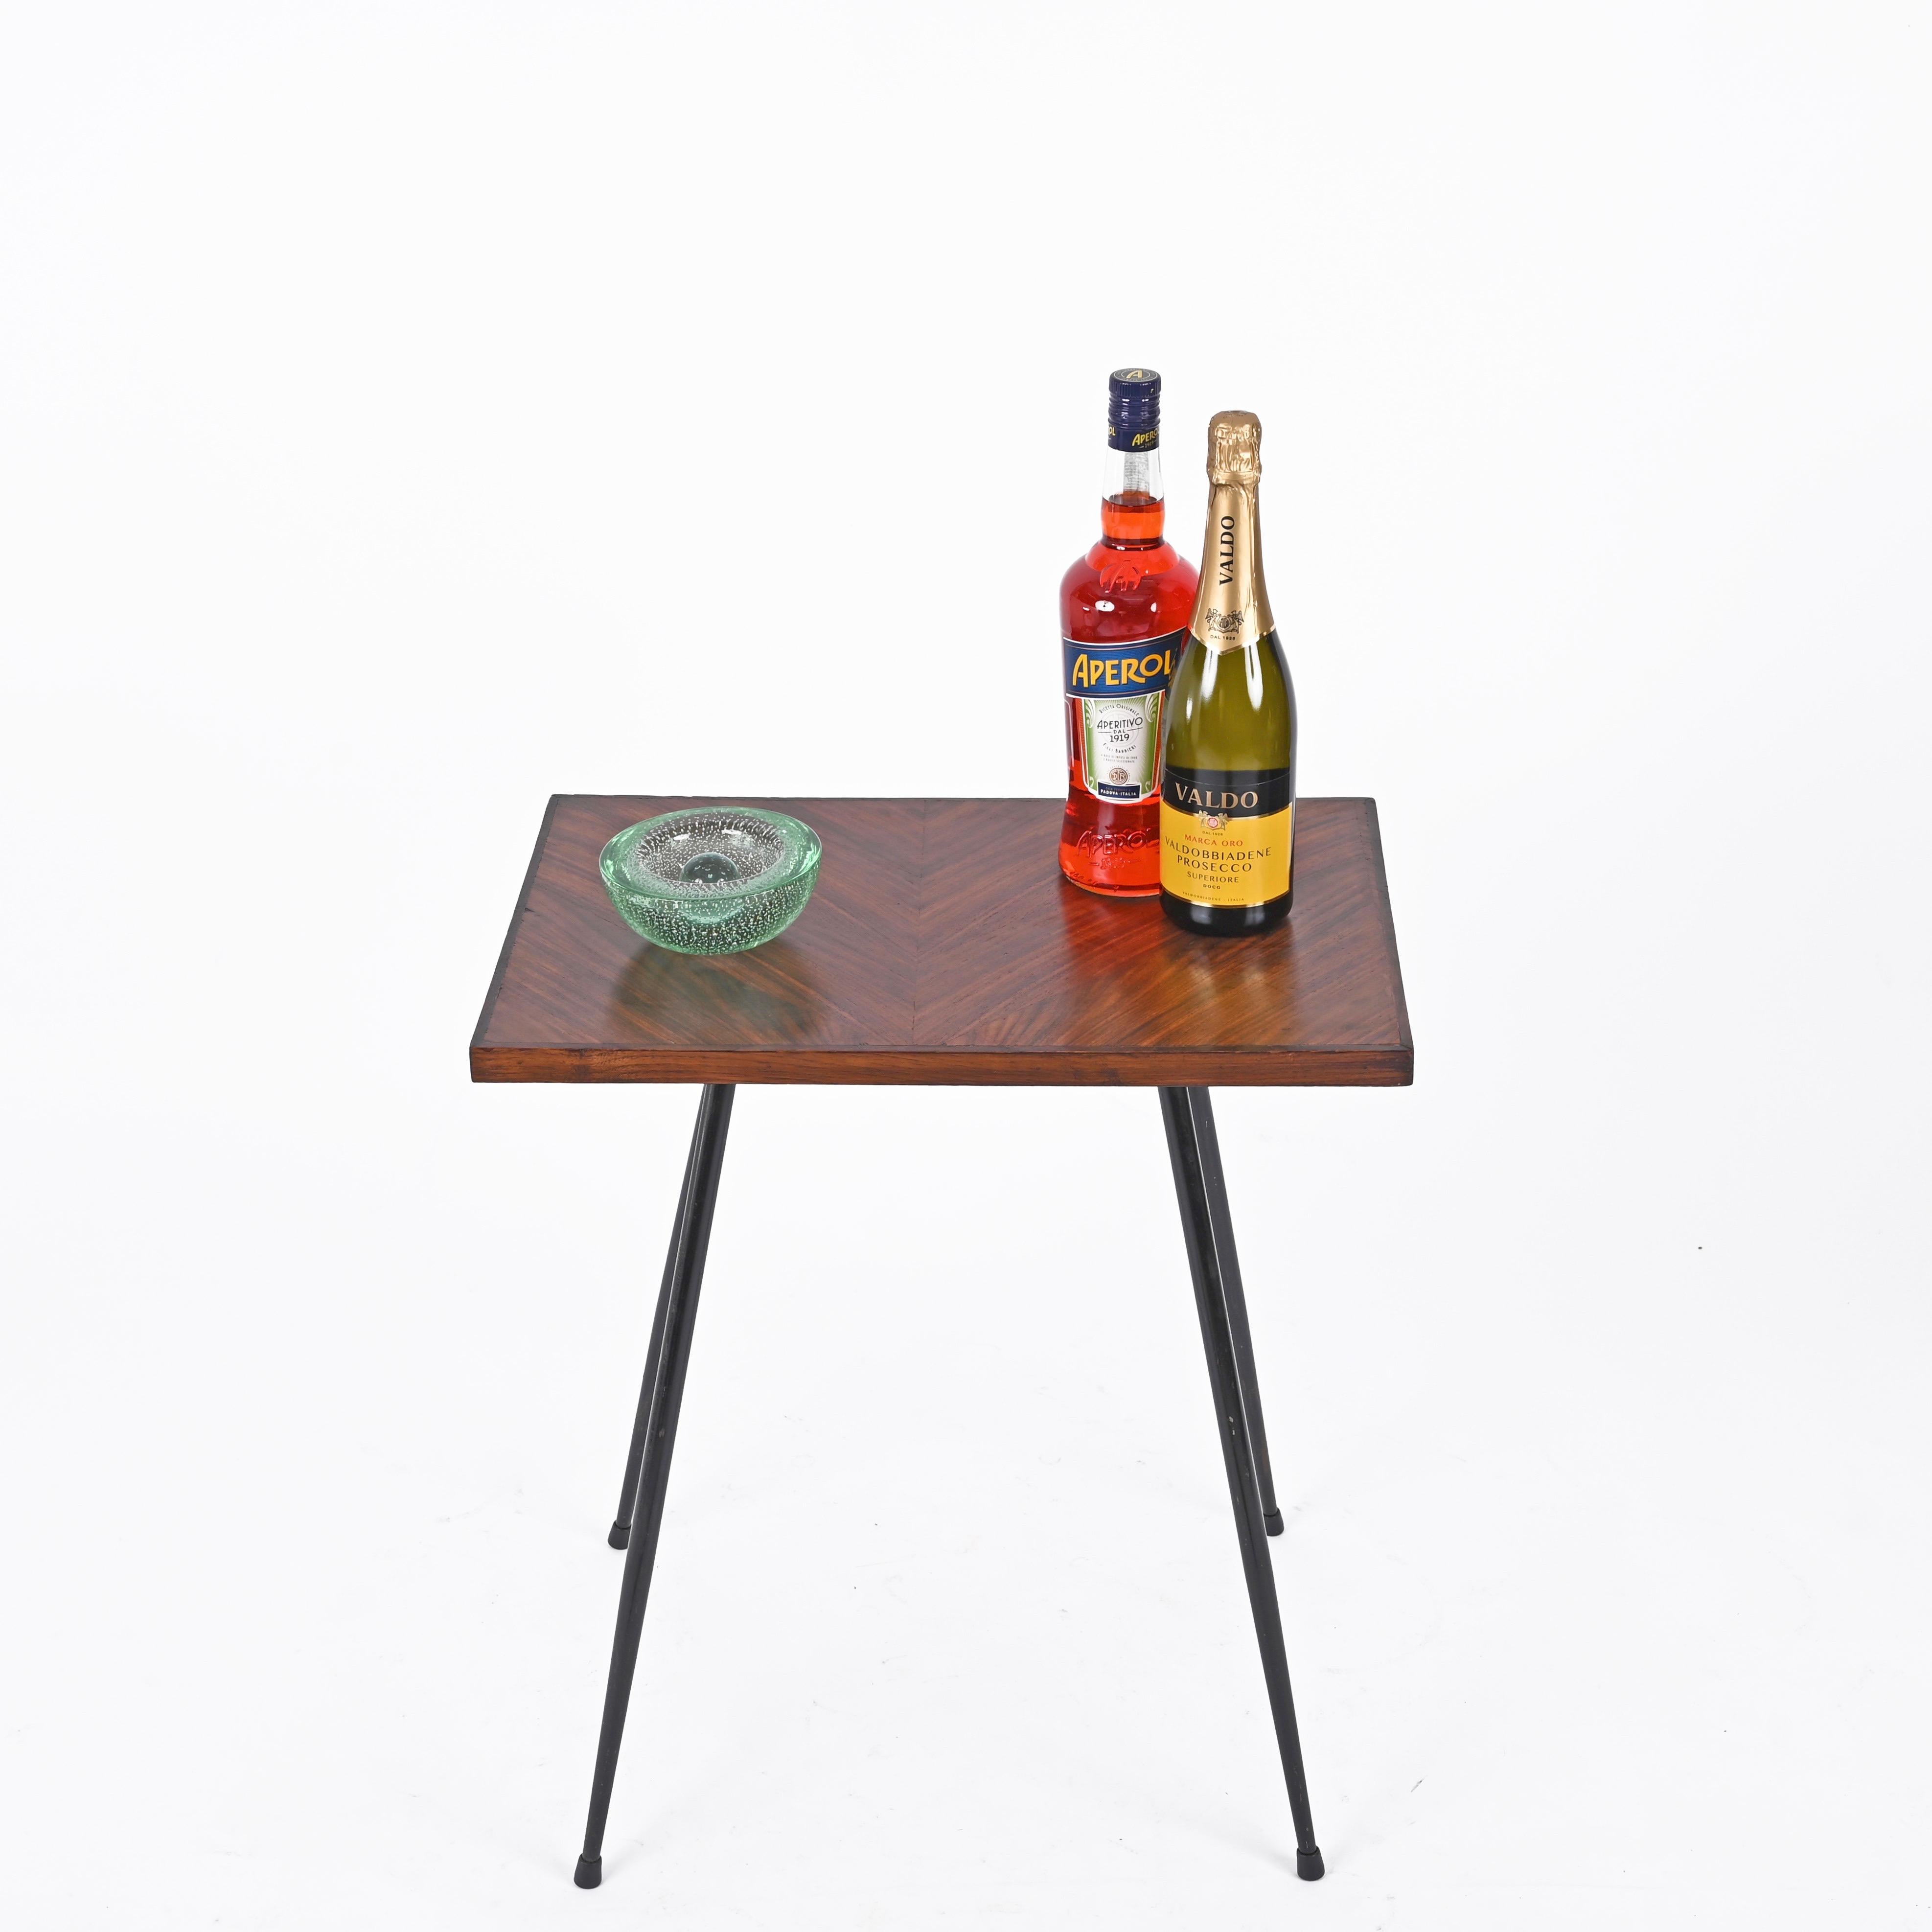 Mid-Century Modern Italian Midcentury Rectangular Side Table in Teak Wood and Enameled Metal, 1950s For Sale